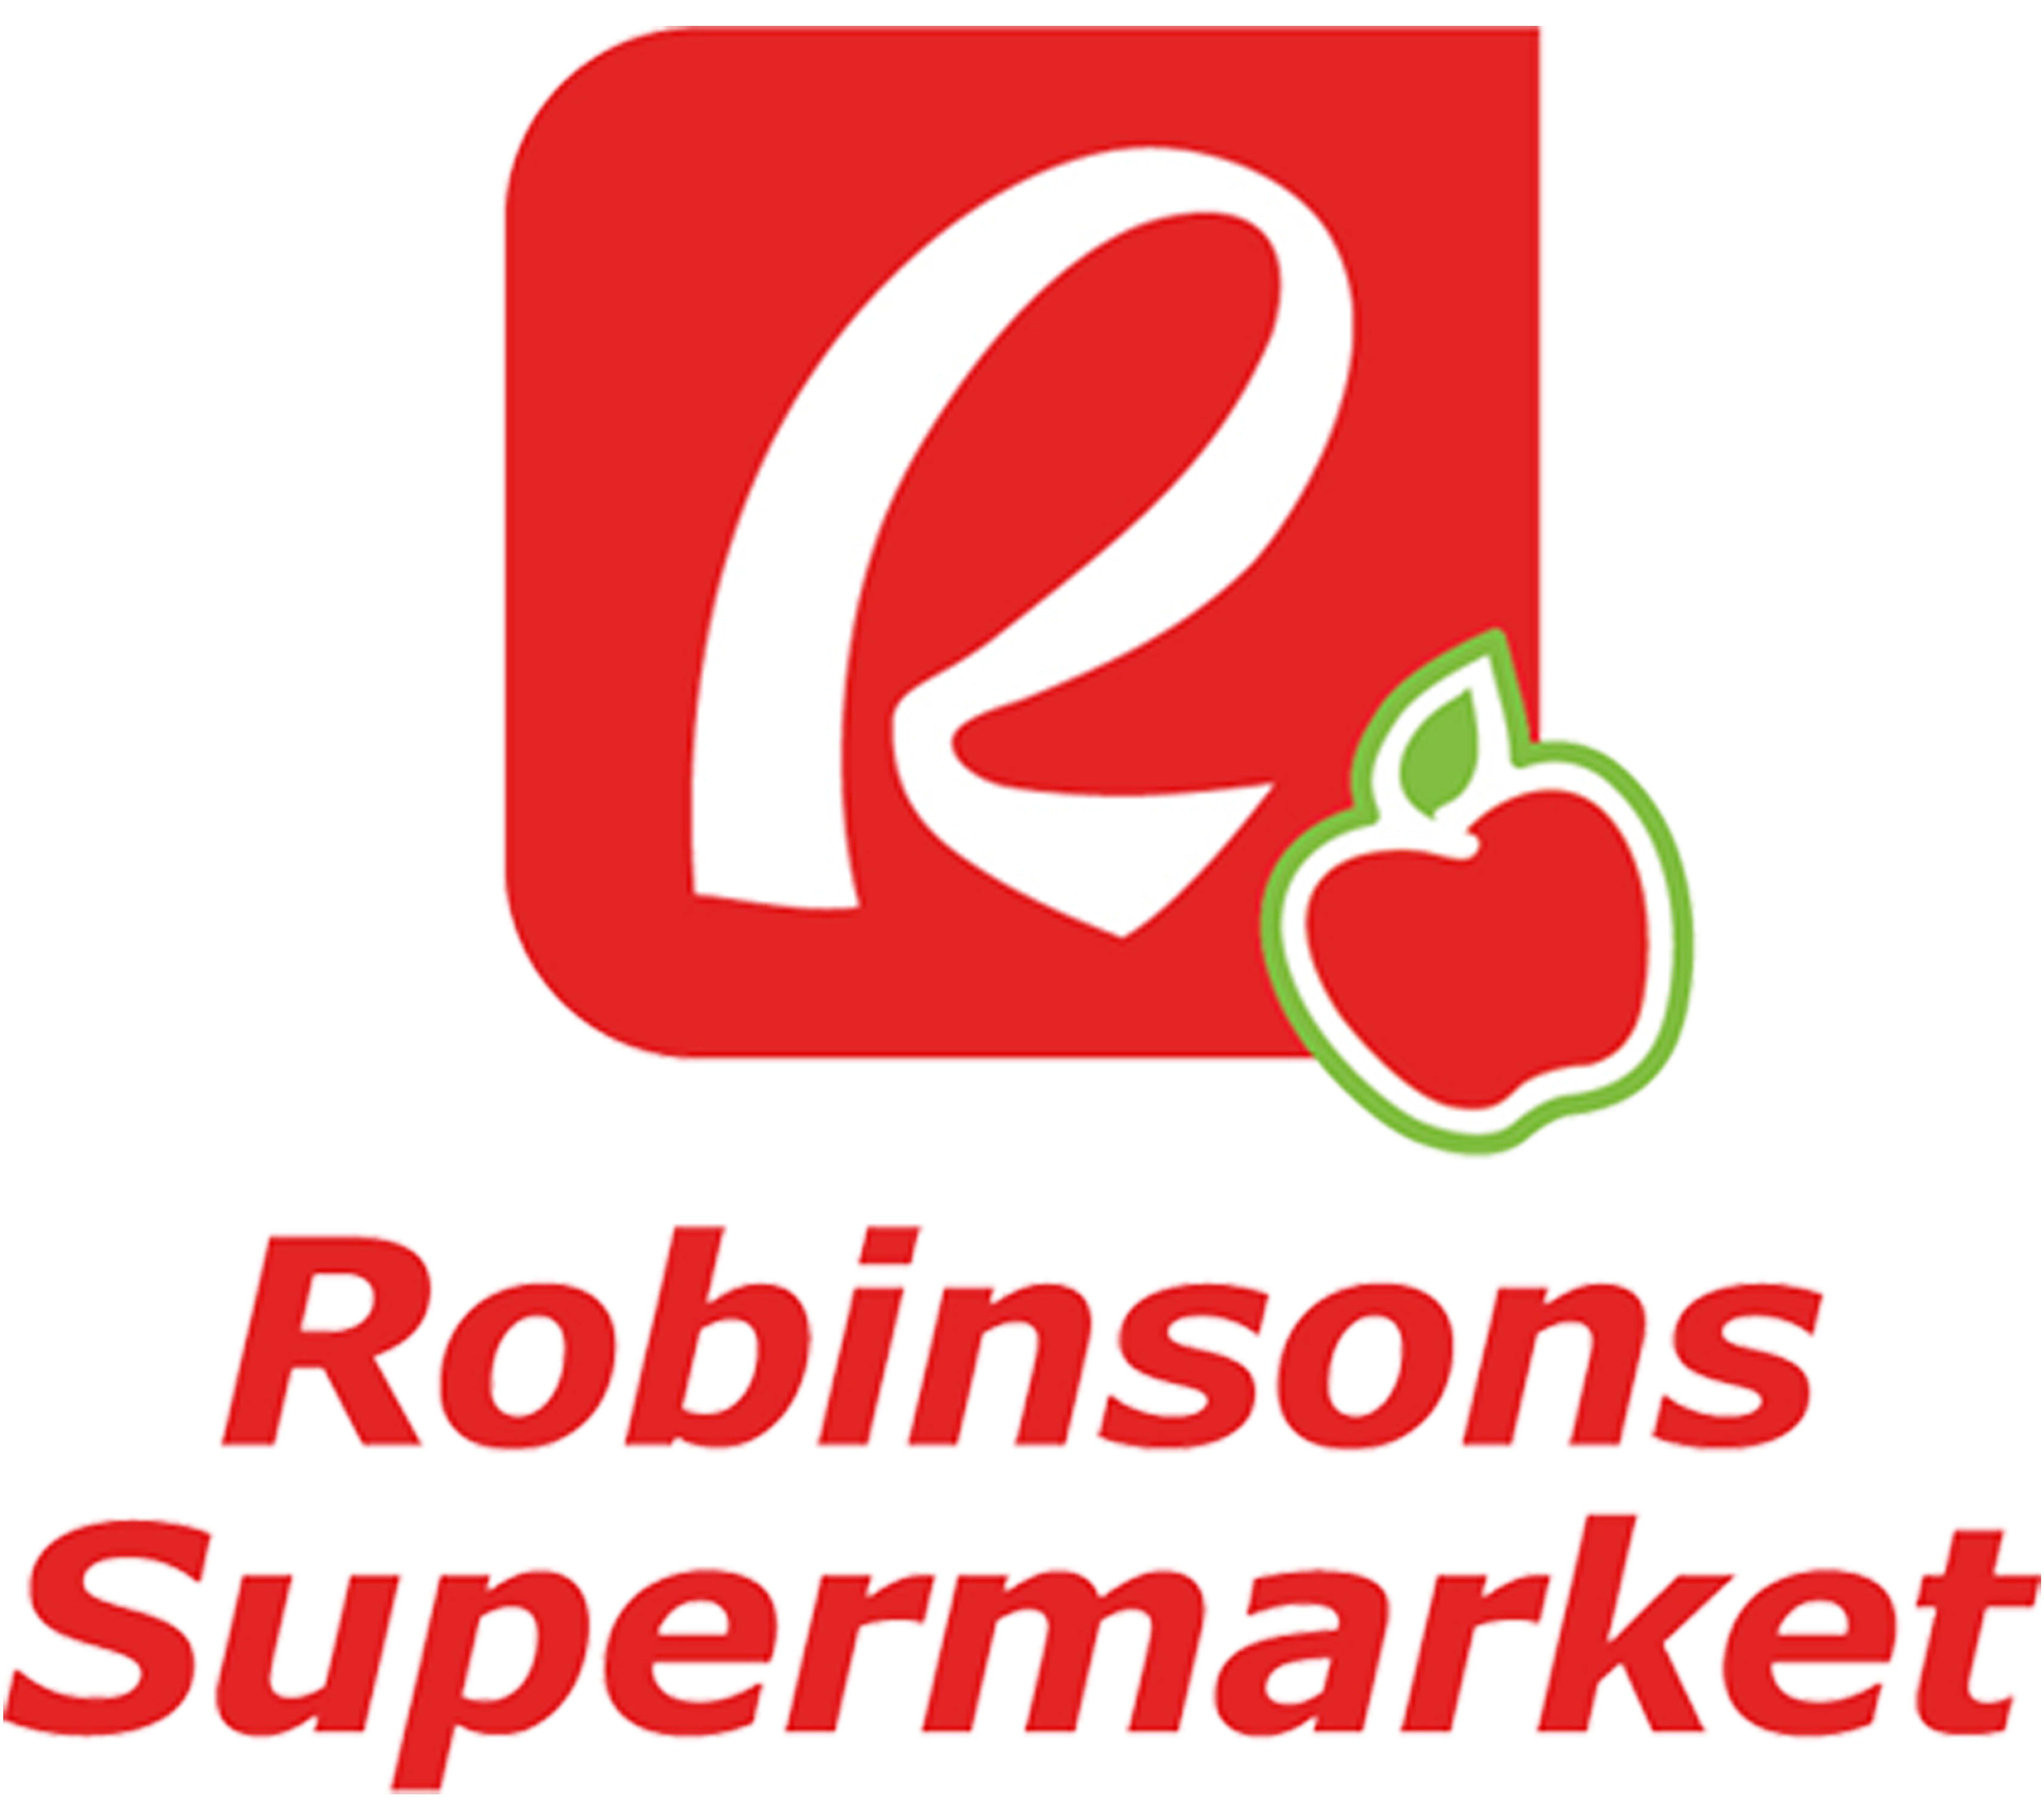 Robinsons Supermarkets